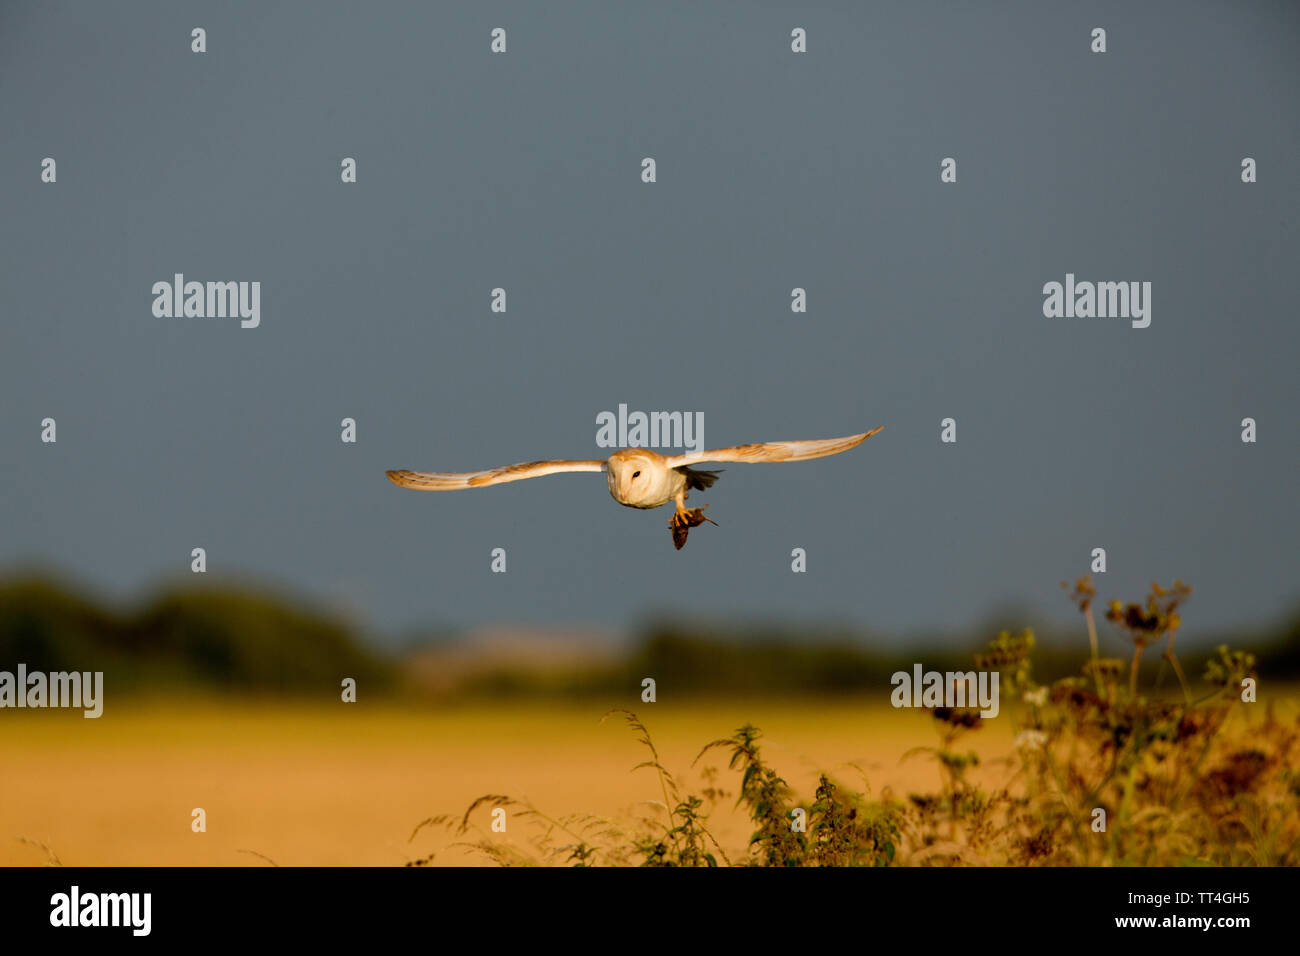 Common Barn-owl (Tyto alba) IN FLIGHT CARRYING FIELD VOLE. FARMLAND BACKGROUND. Stock Photo